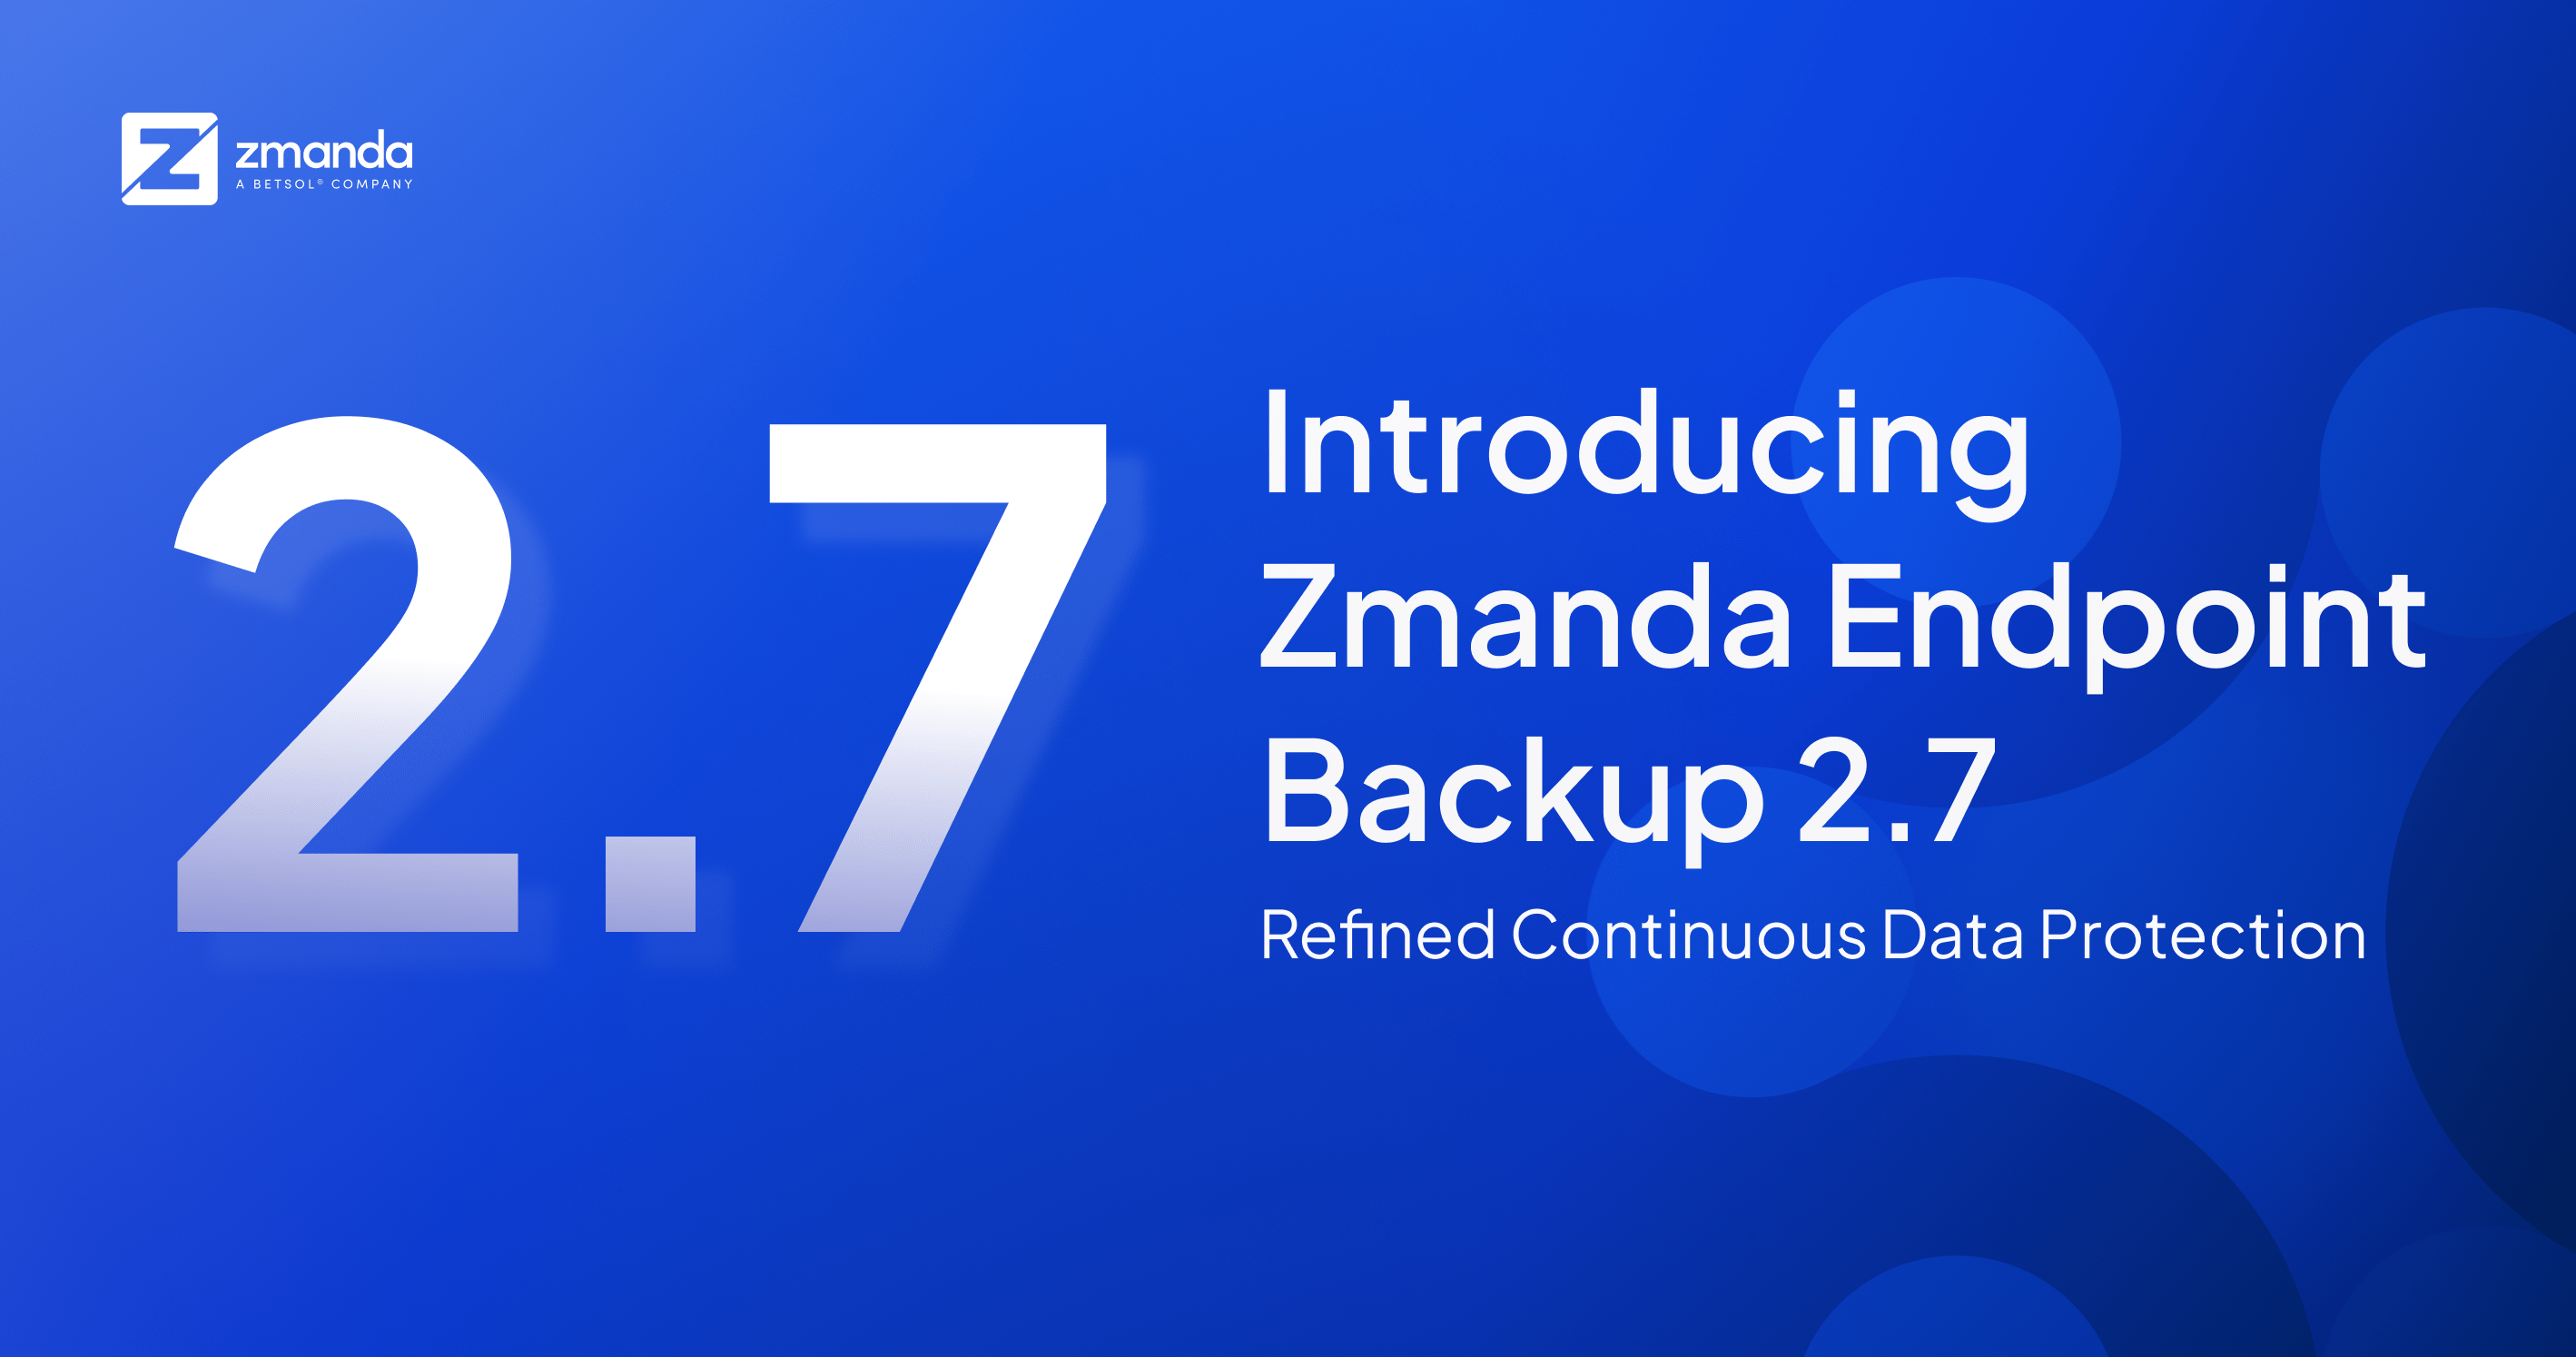 Zmanda Endpoint Backup 2.7